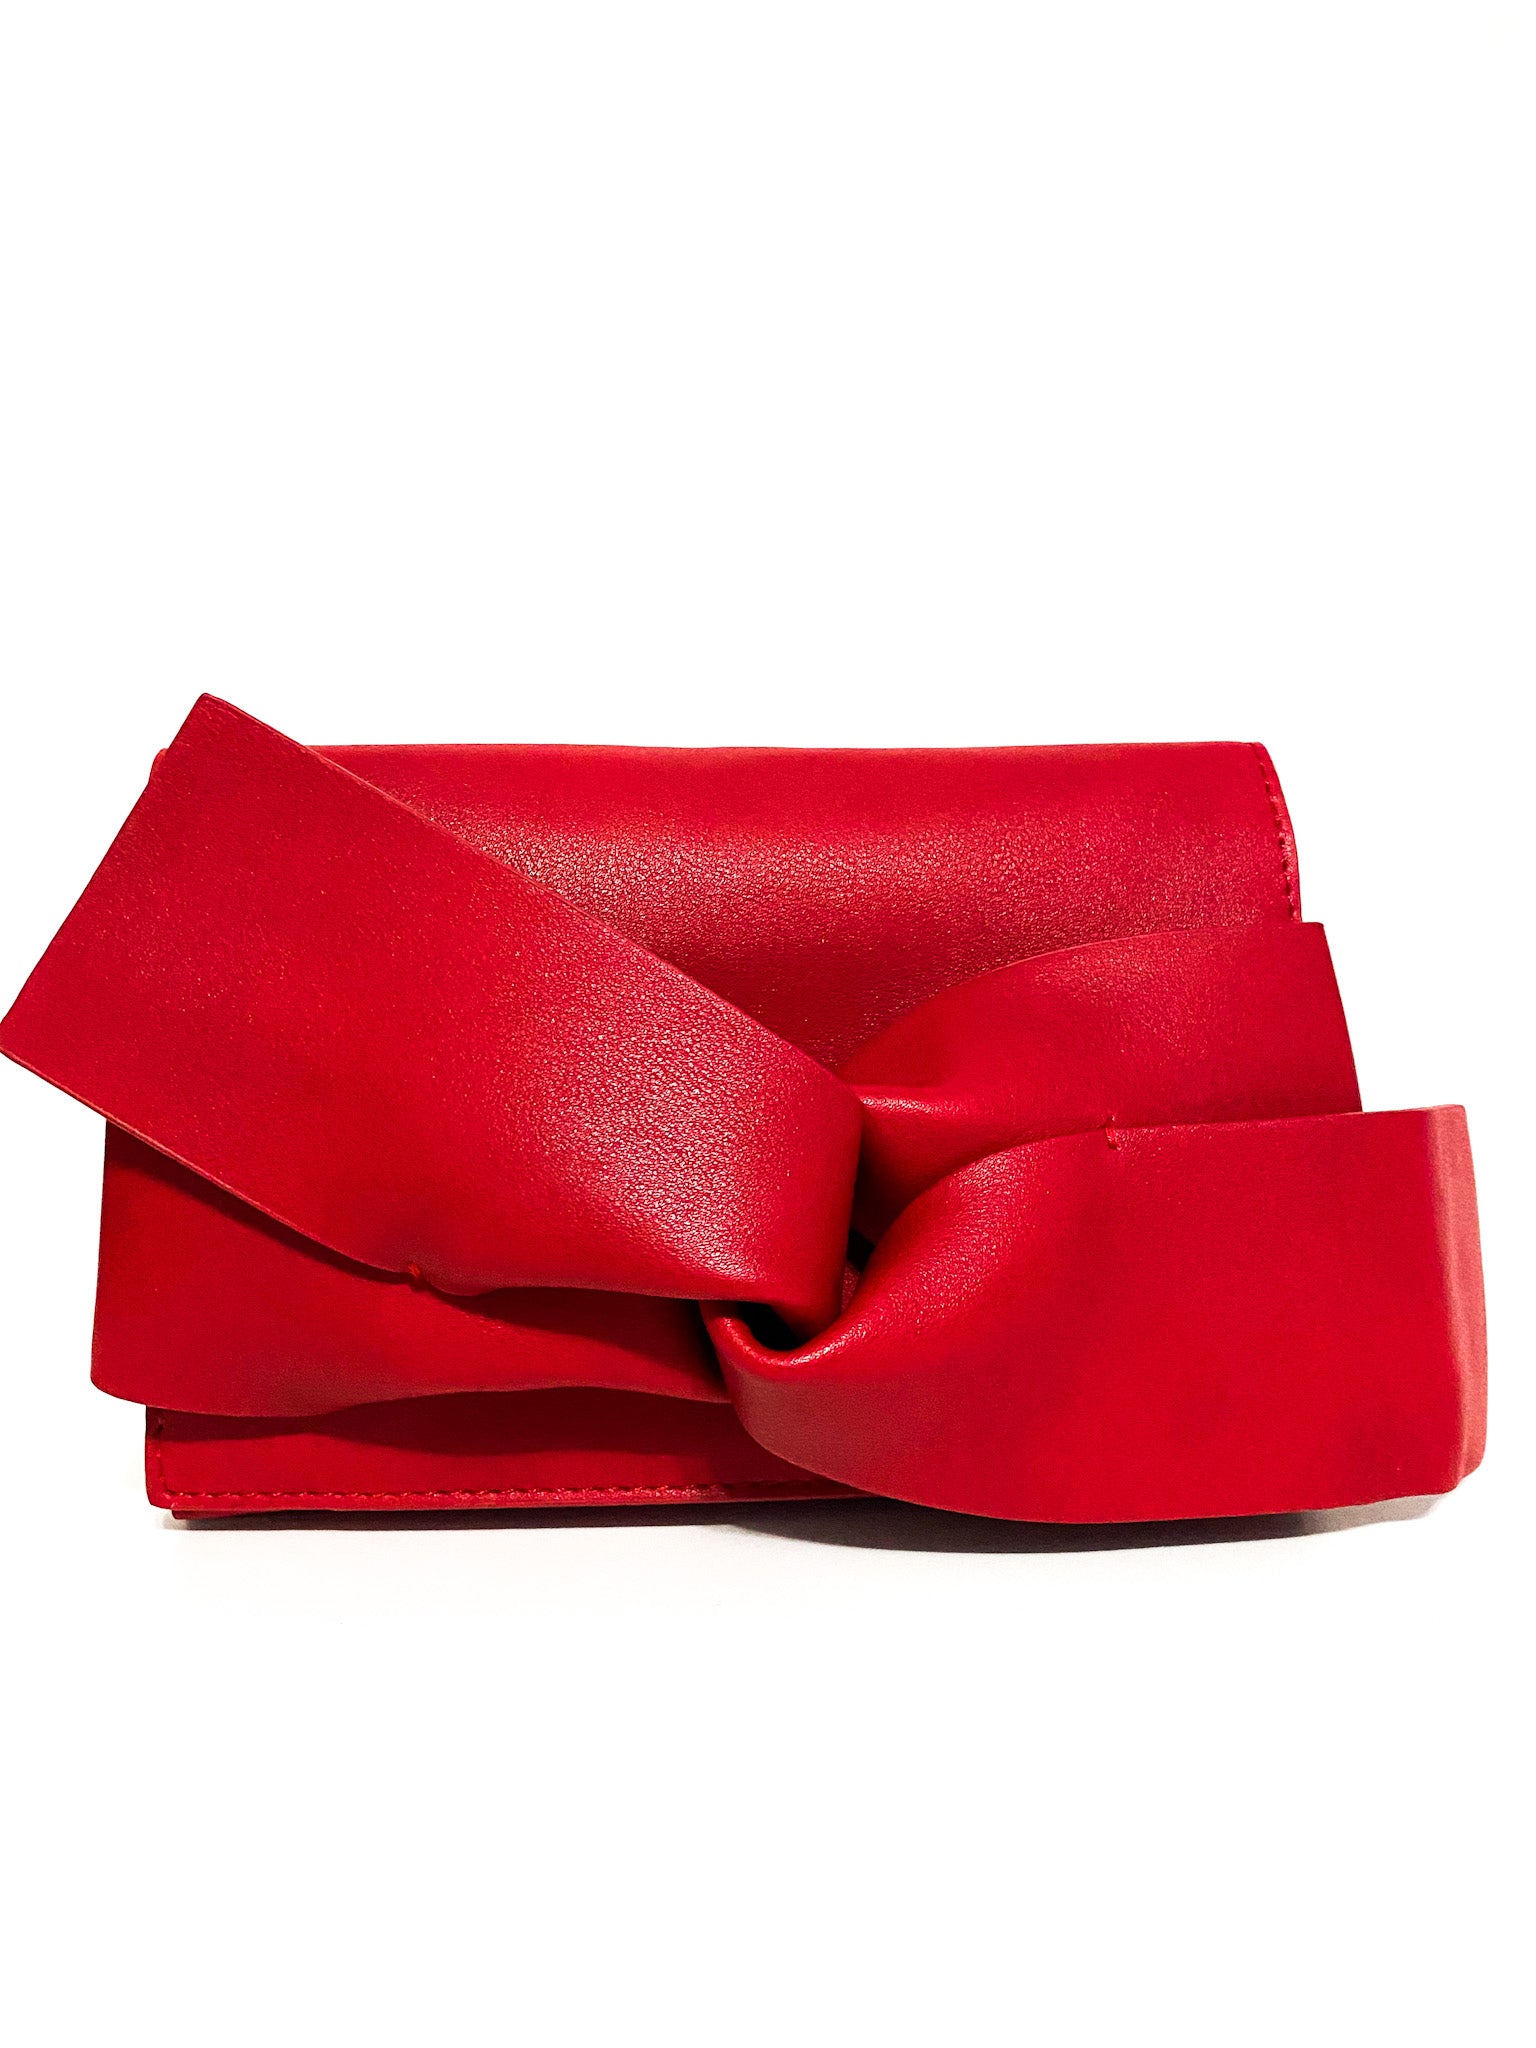 chanel classic handbag small flap